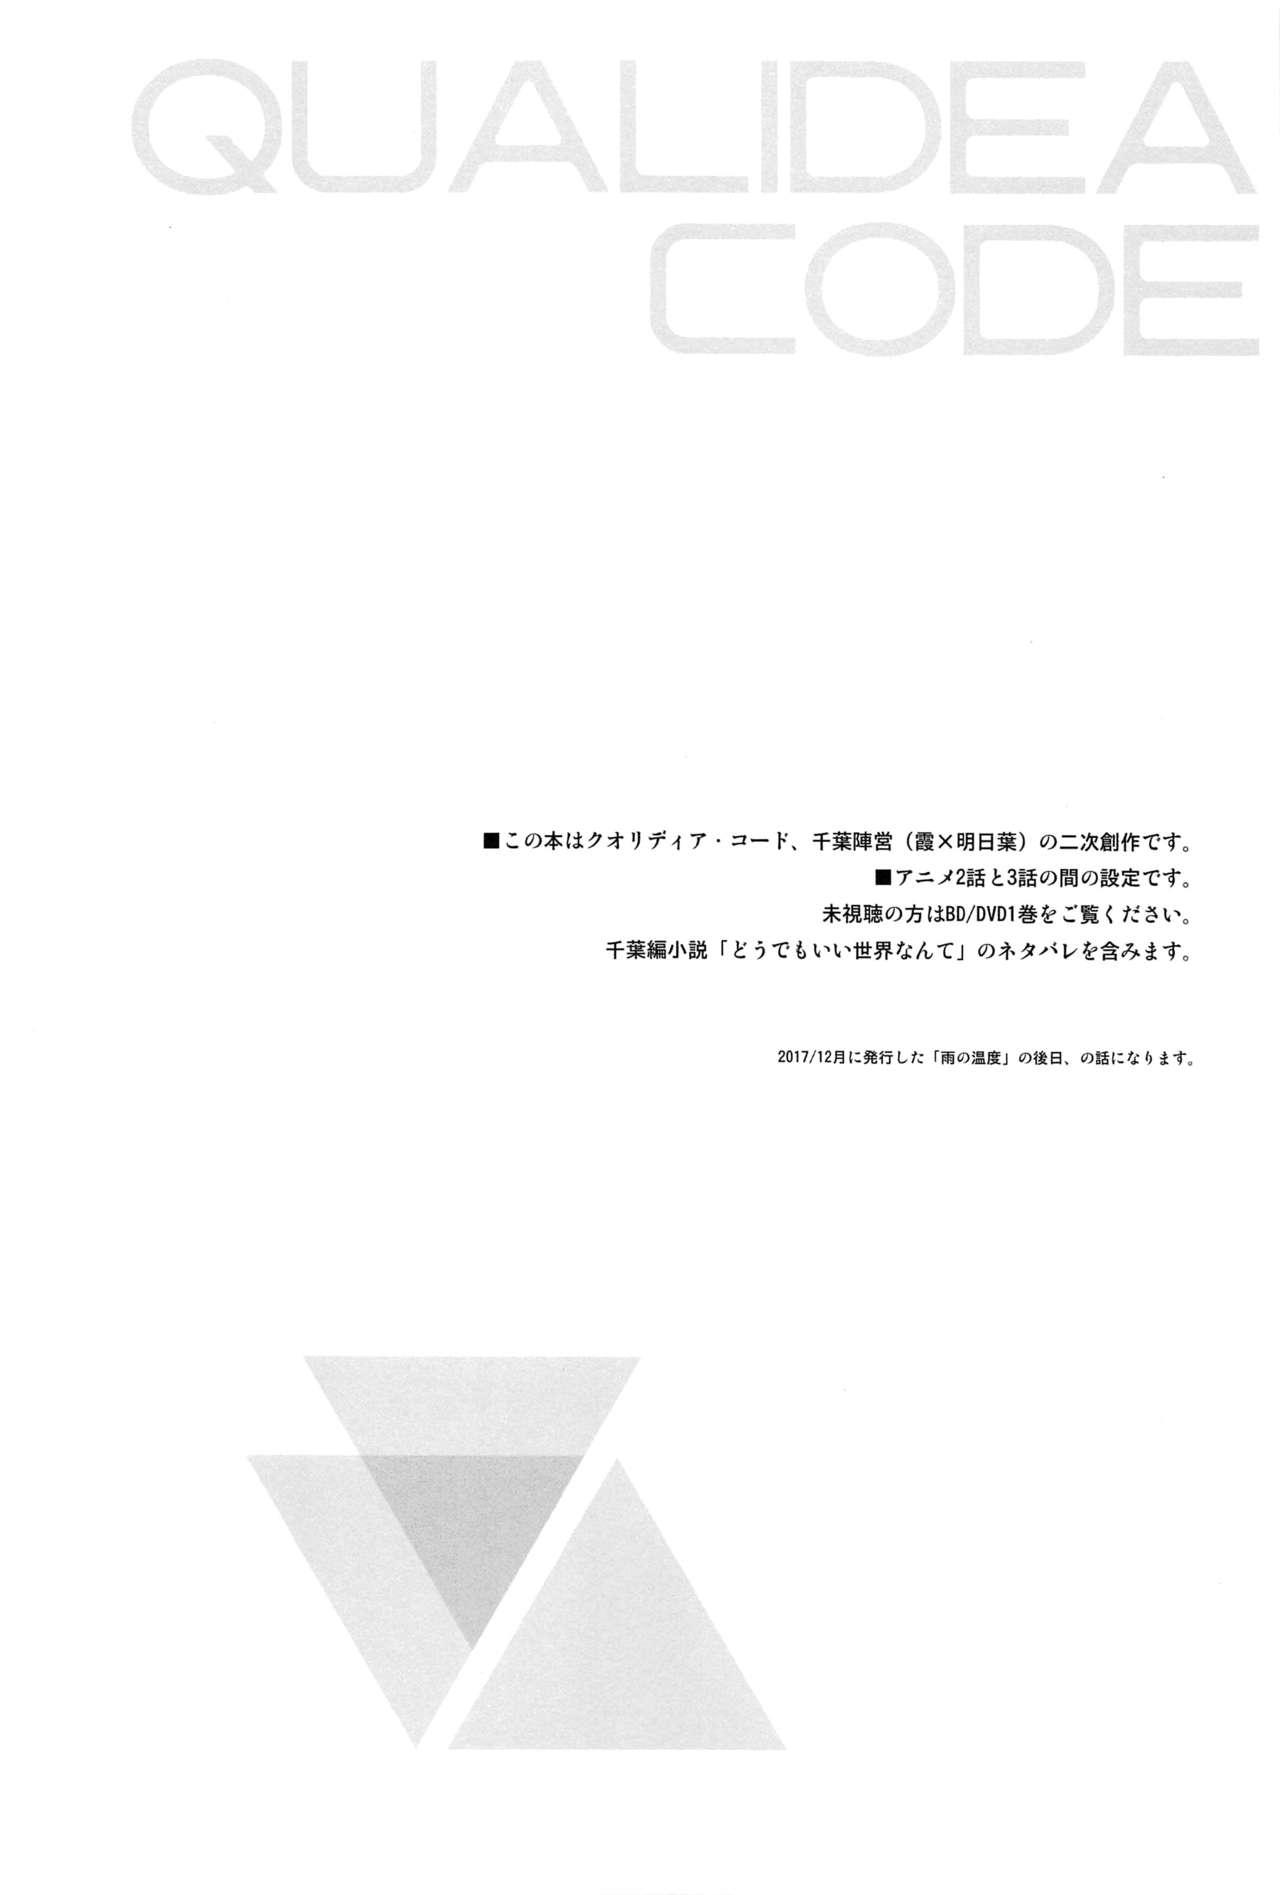 Pink Kono Sekai no Owari made - Qualidea code 8teen - Page 4